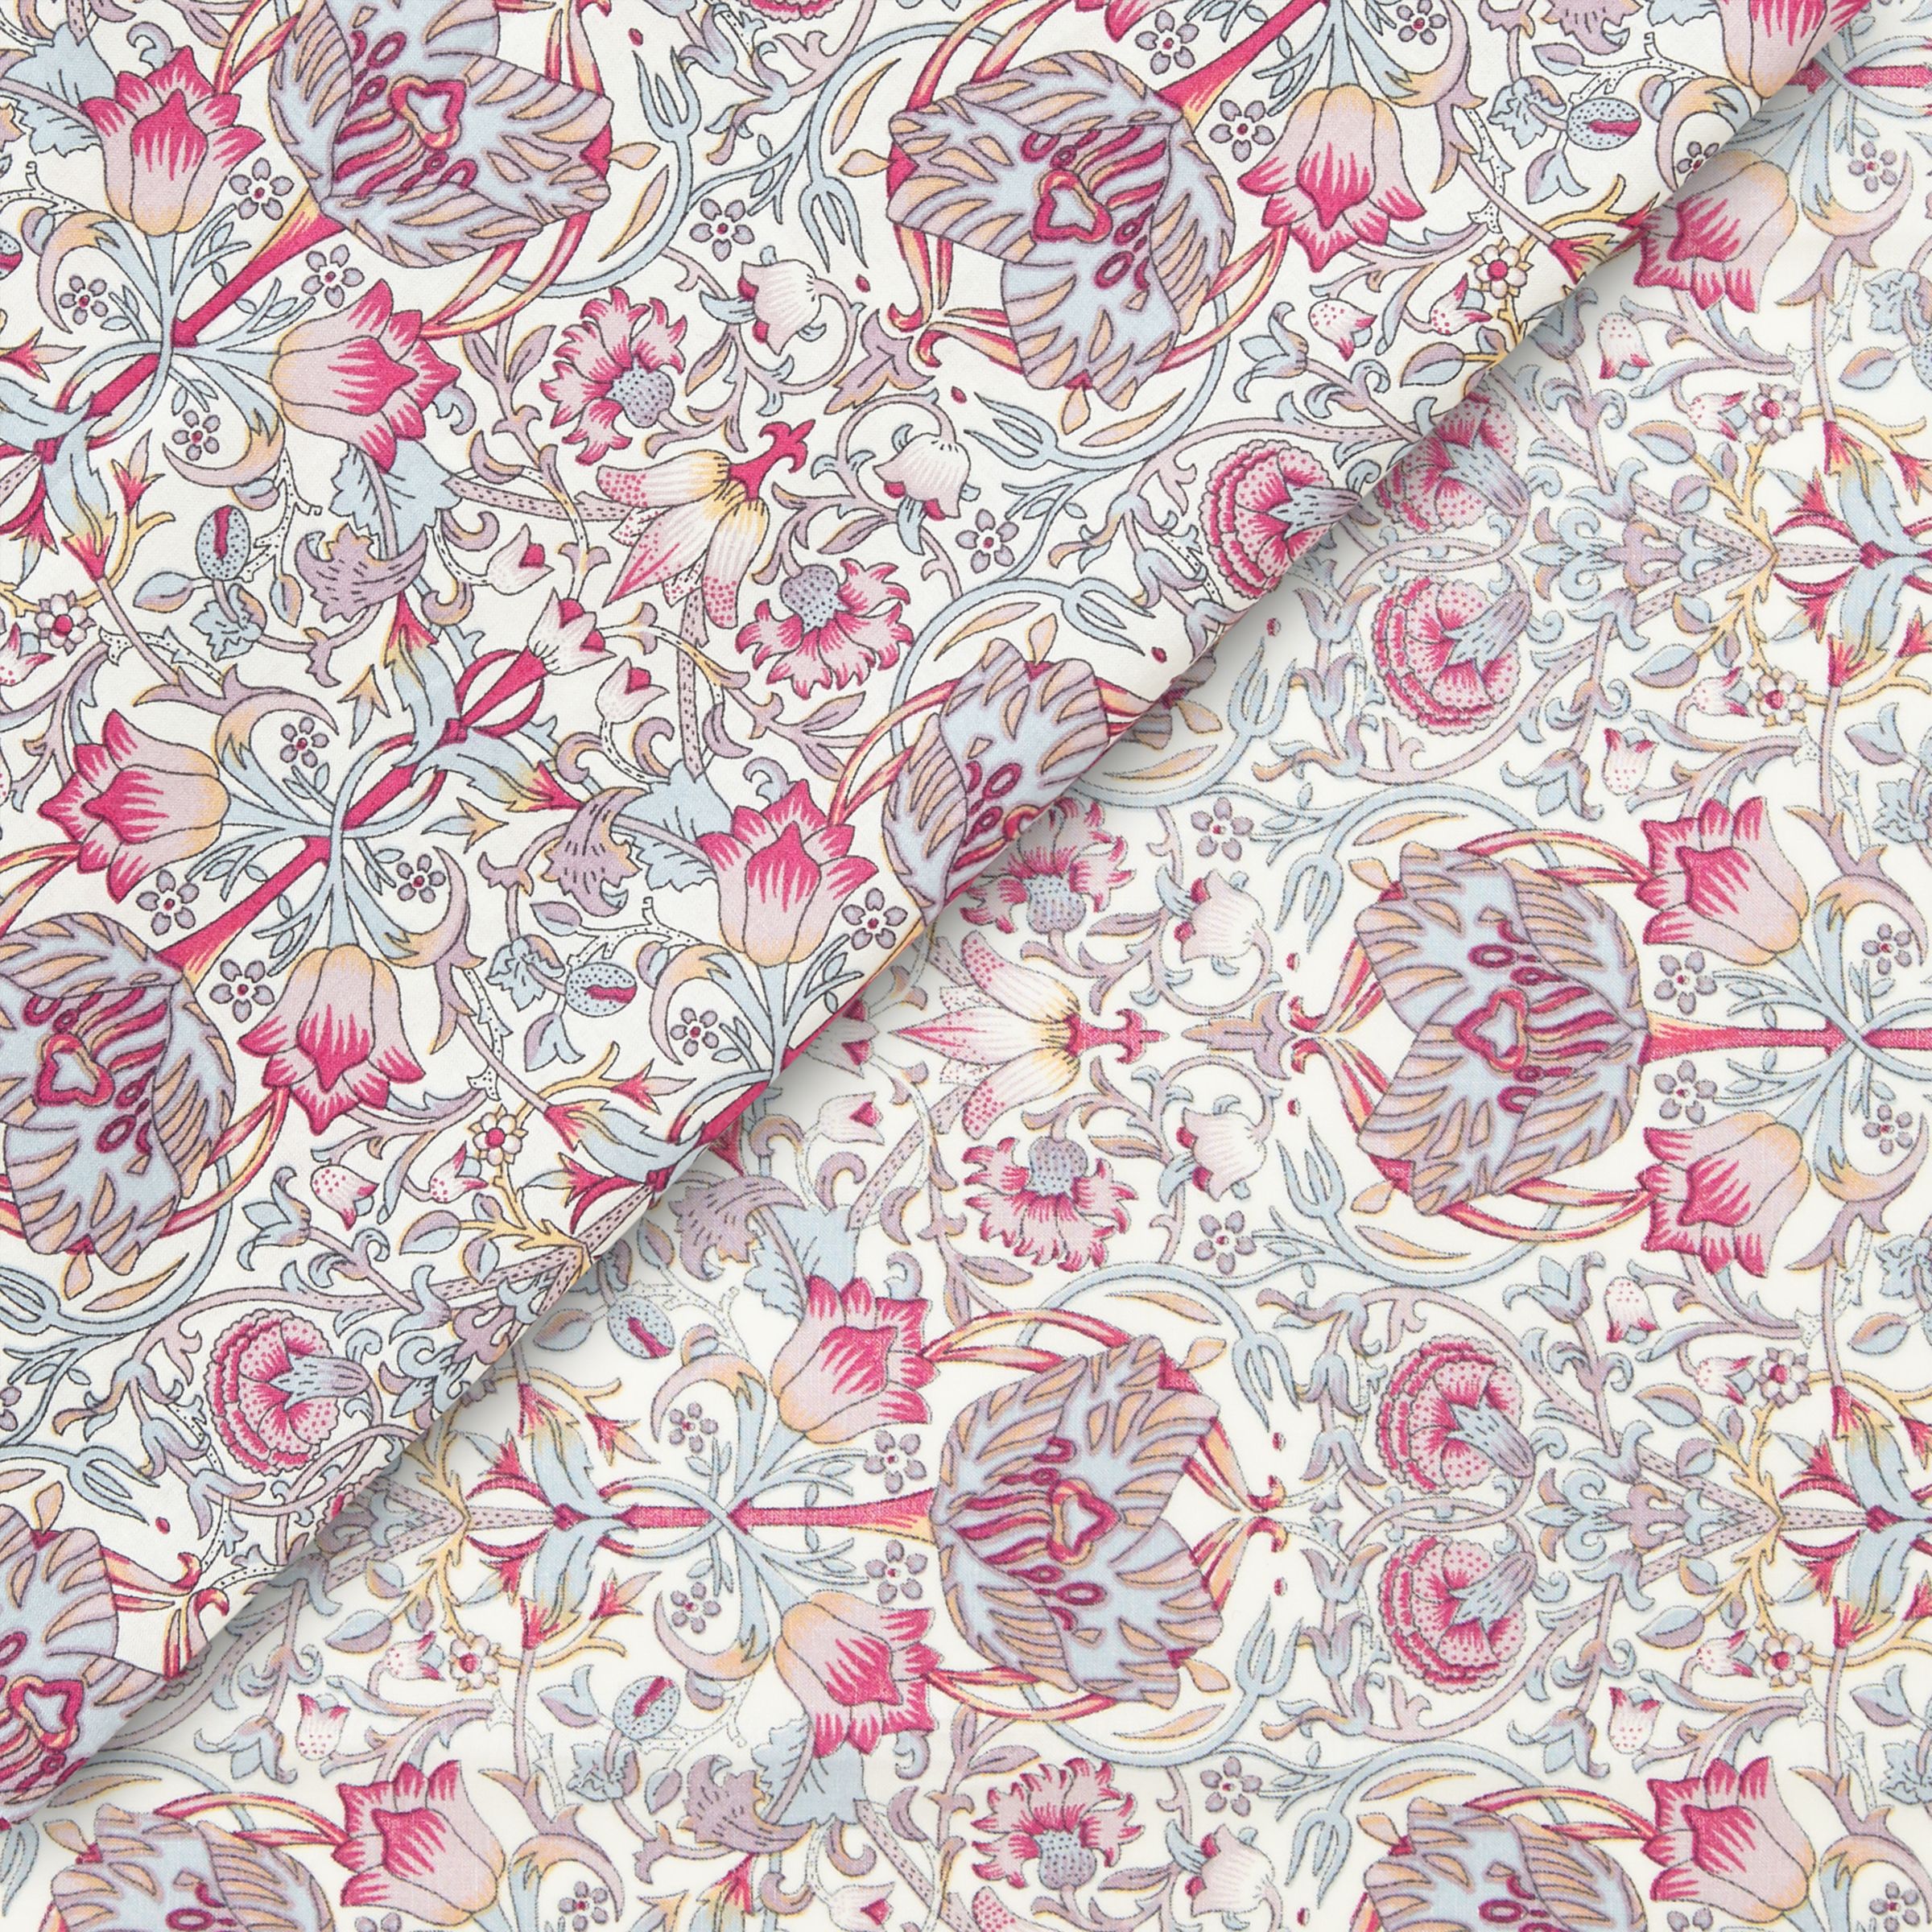 Peter Horton Textiles Art Deco Print Fabric, Pink